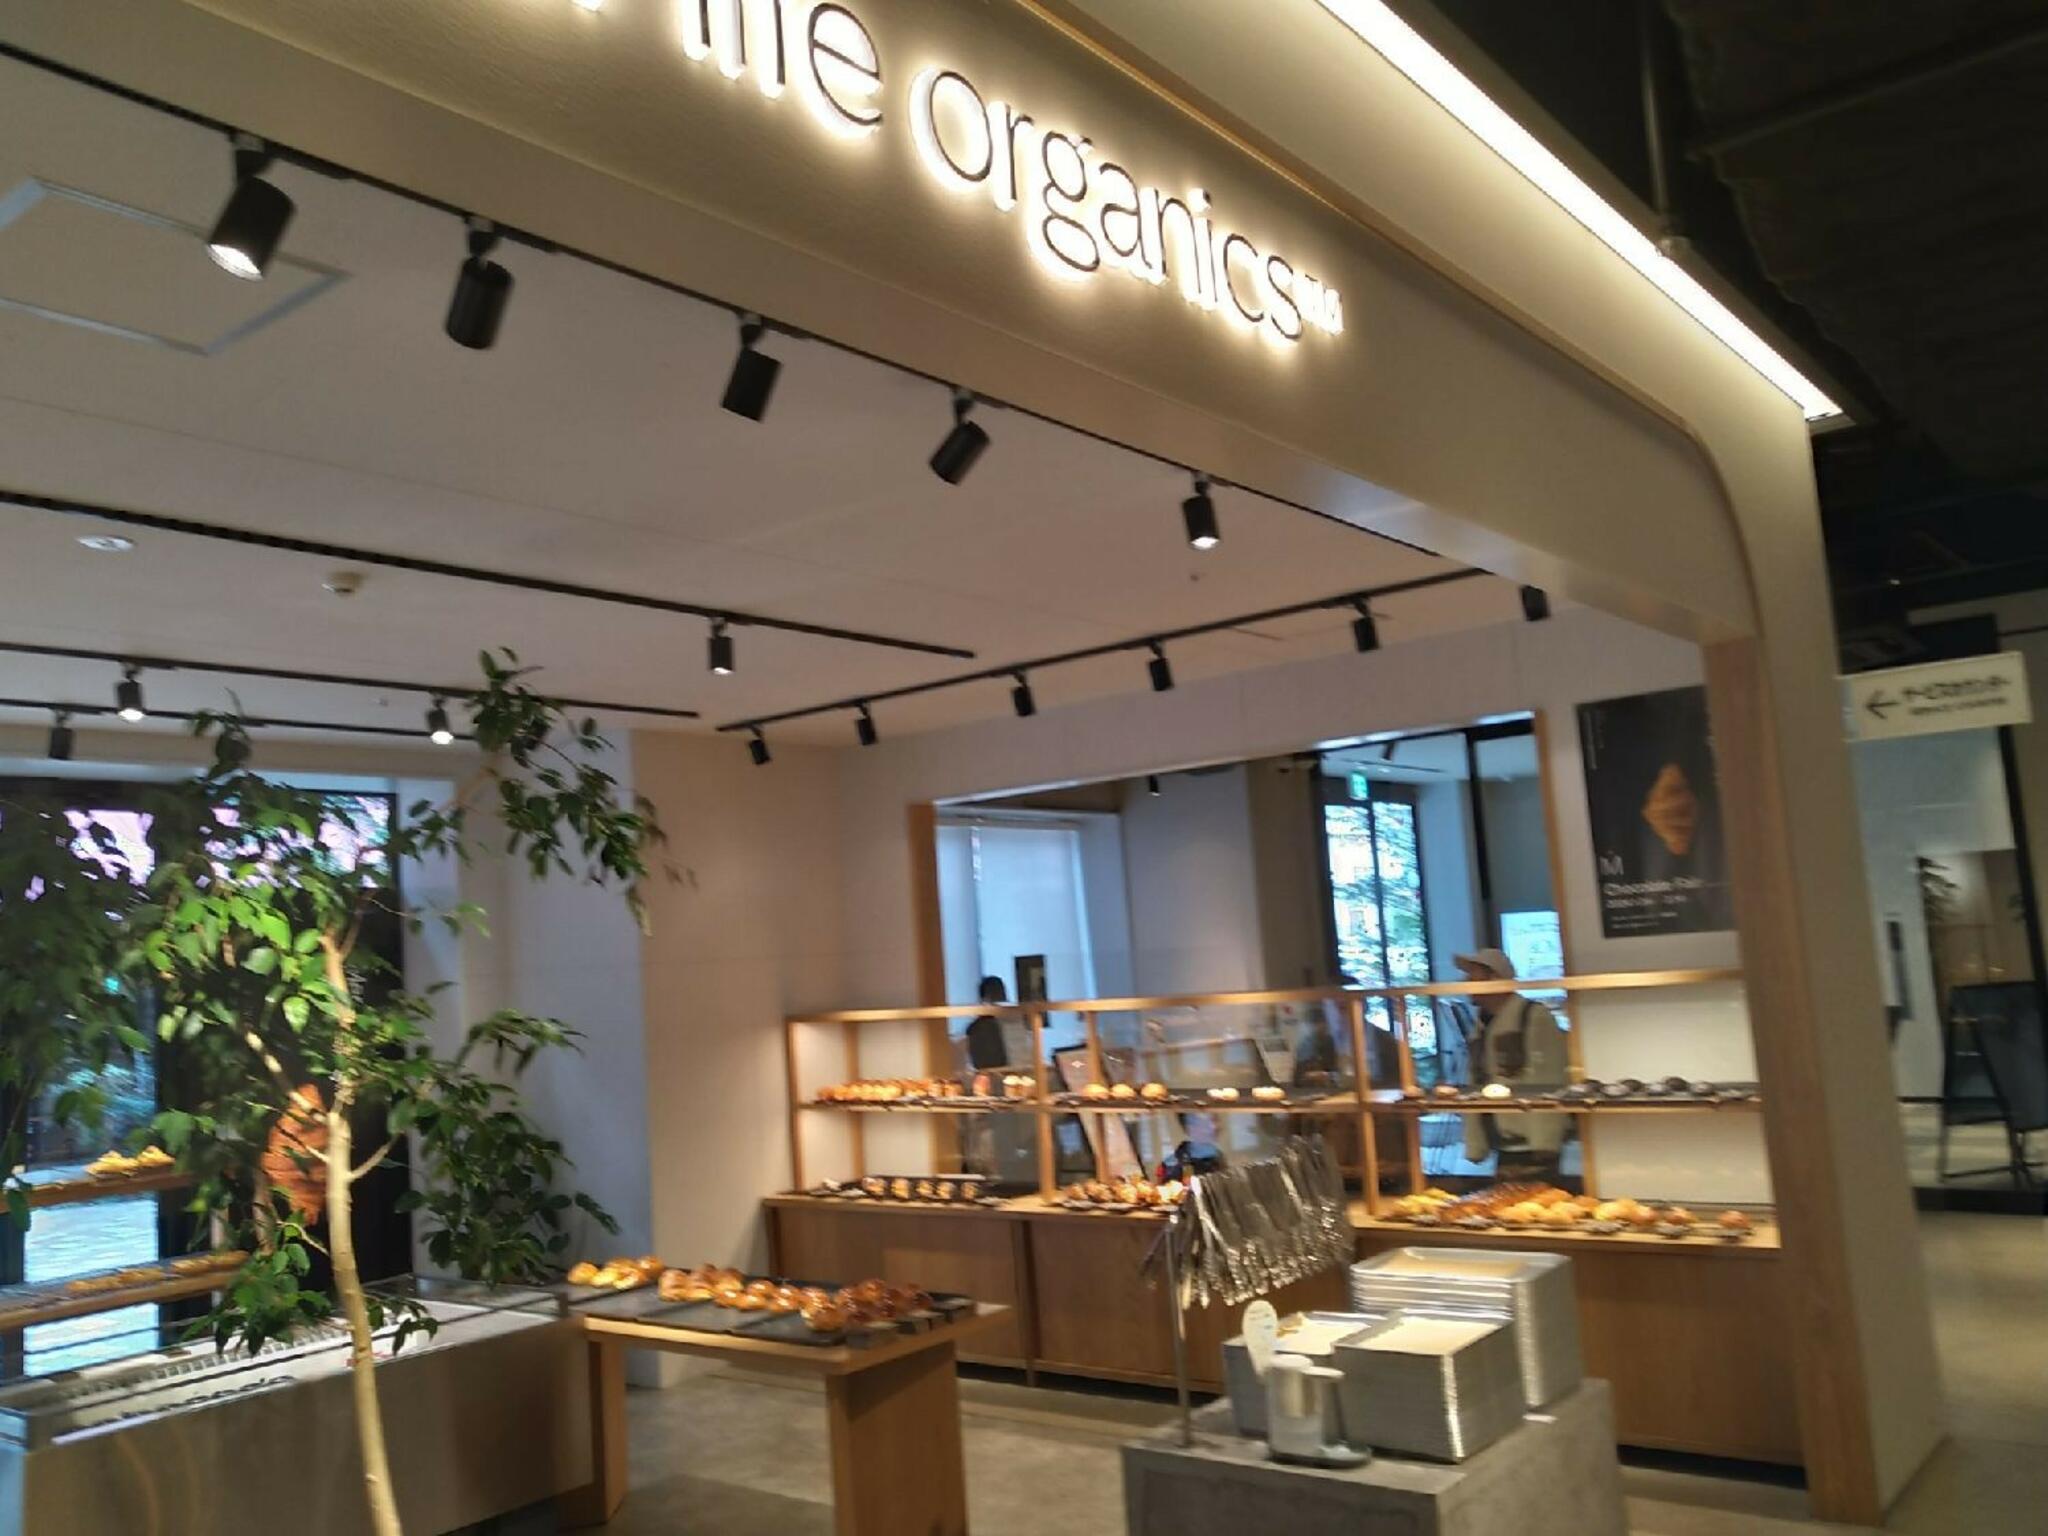 Merci life organics 岡山杜の街店の代表写真8